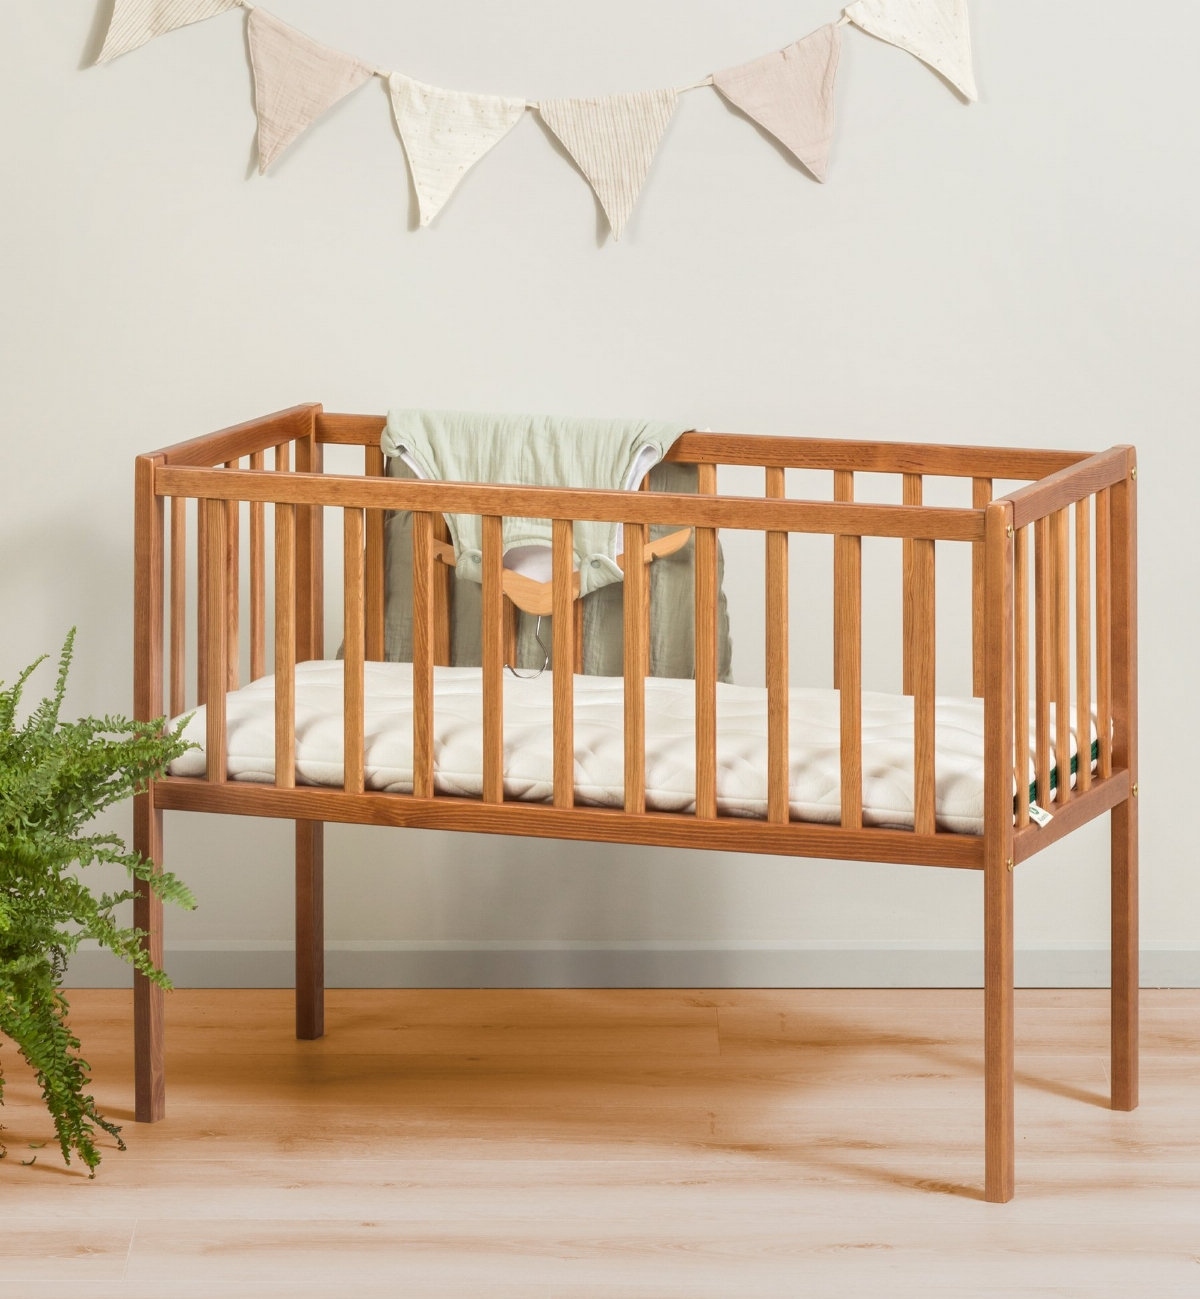 Aloenatura® cradle/landau mattress cover: Comfort and softness for your baby